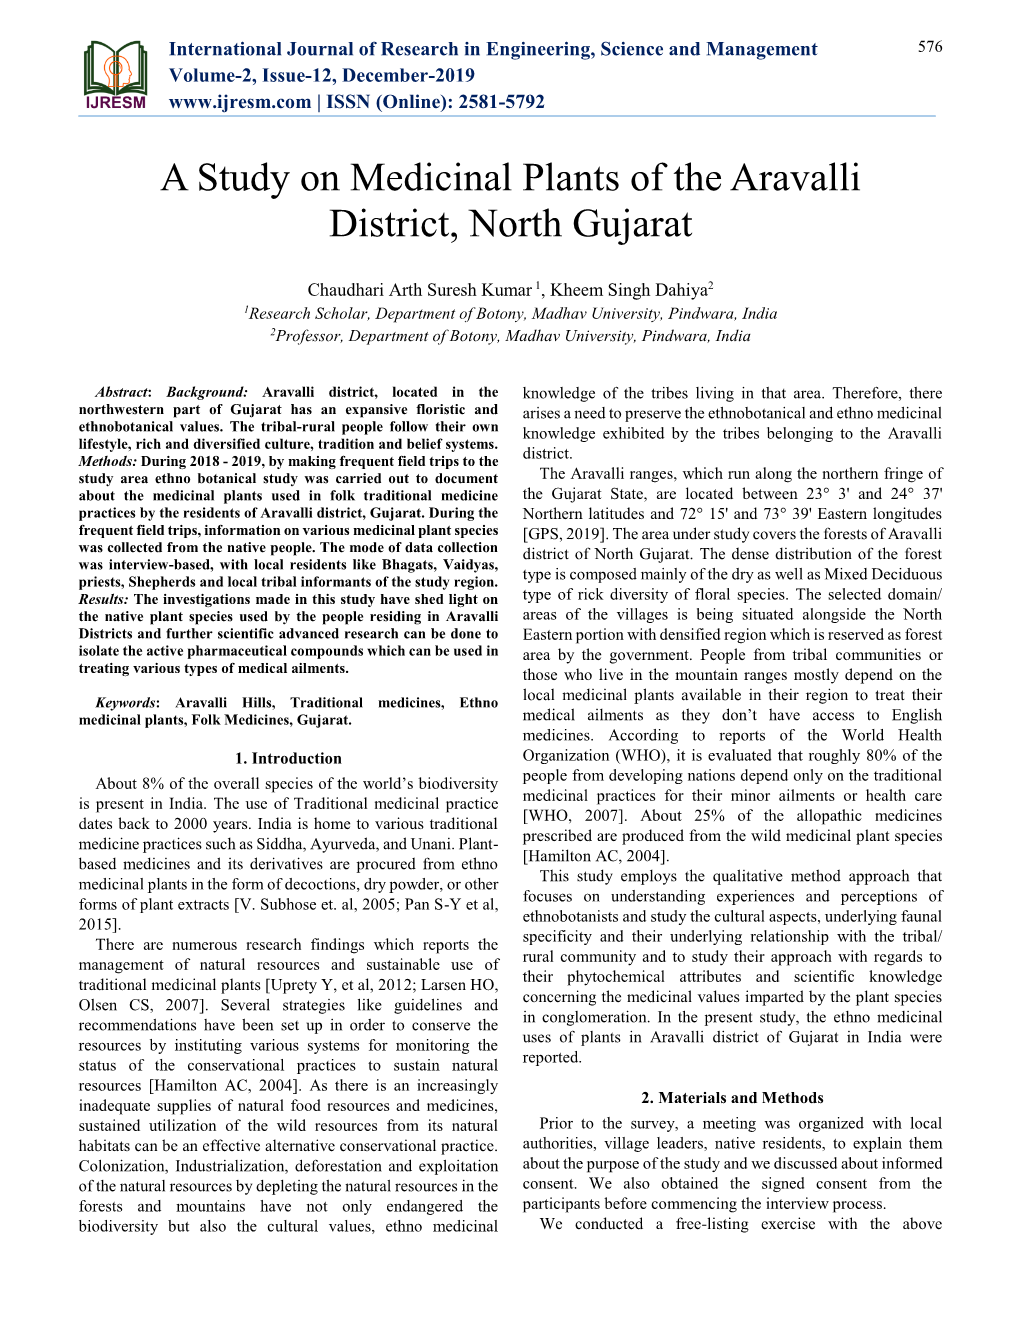 A Study on Medicinal Plants of the Aravalli District, North Gujarat